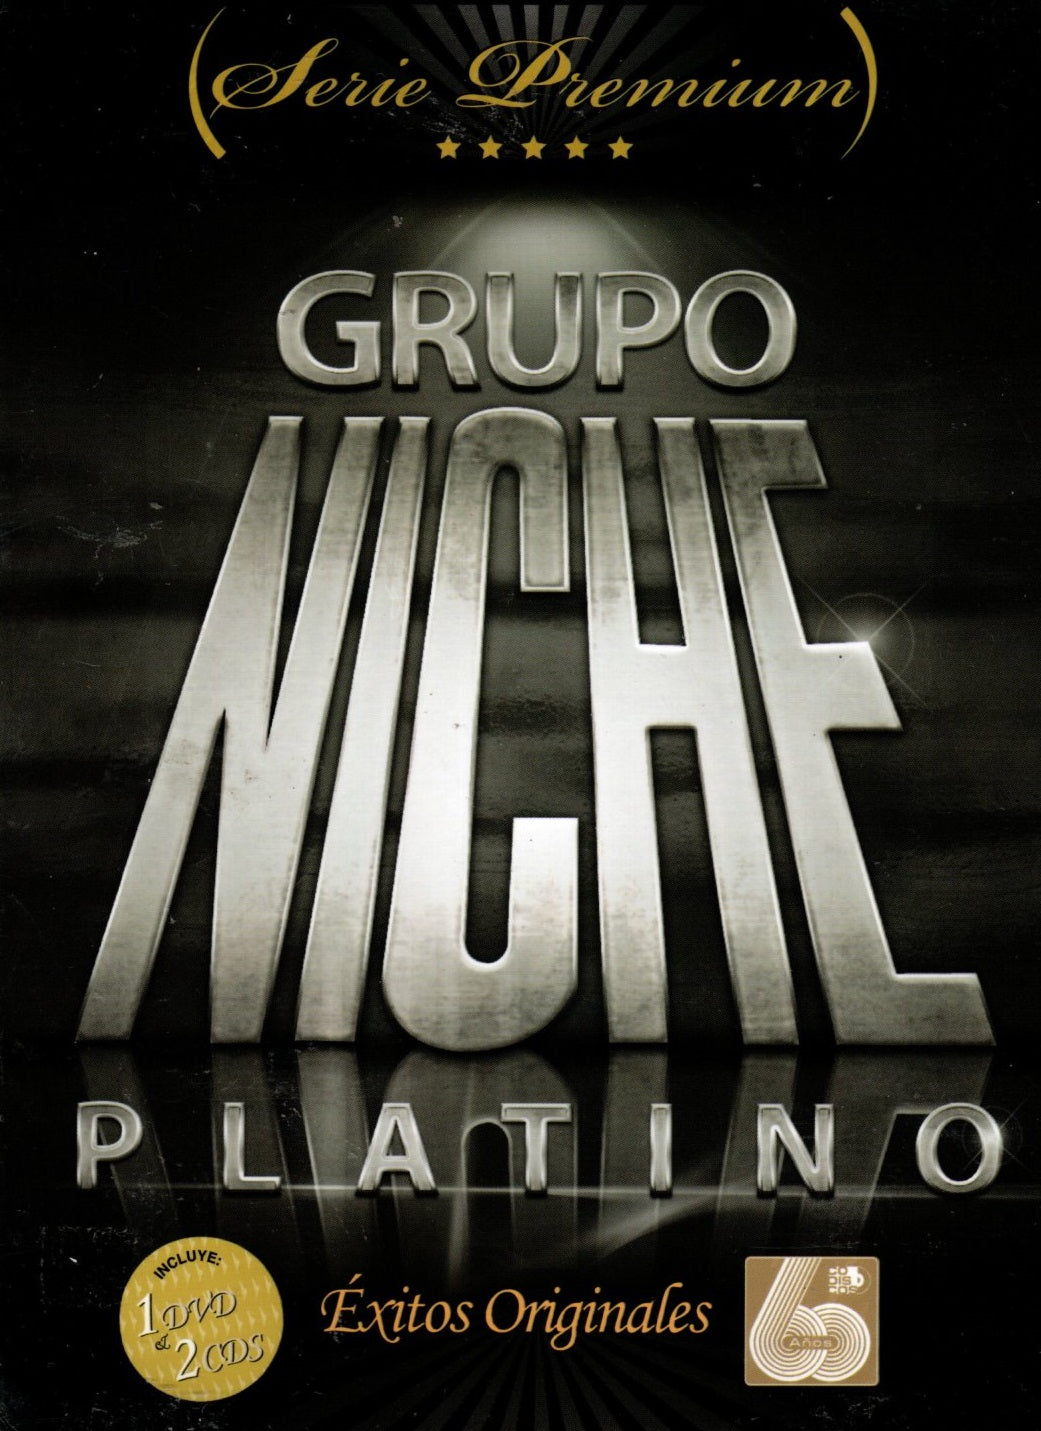 CDX2 + DVD Grupo Niche - Platino